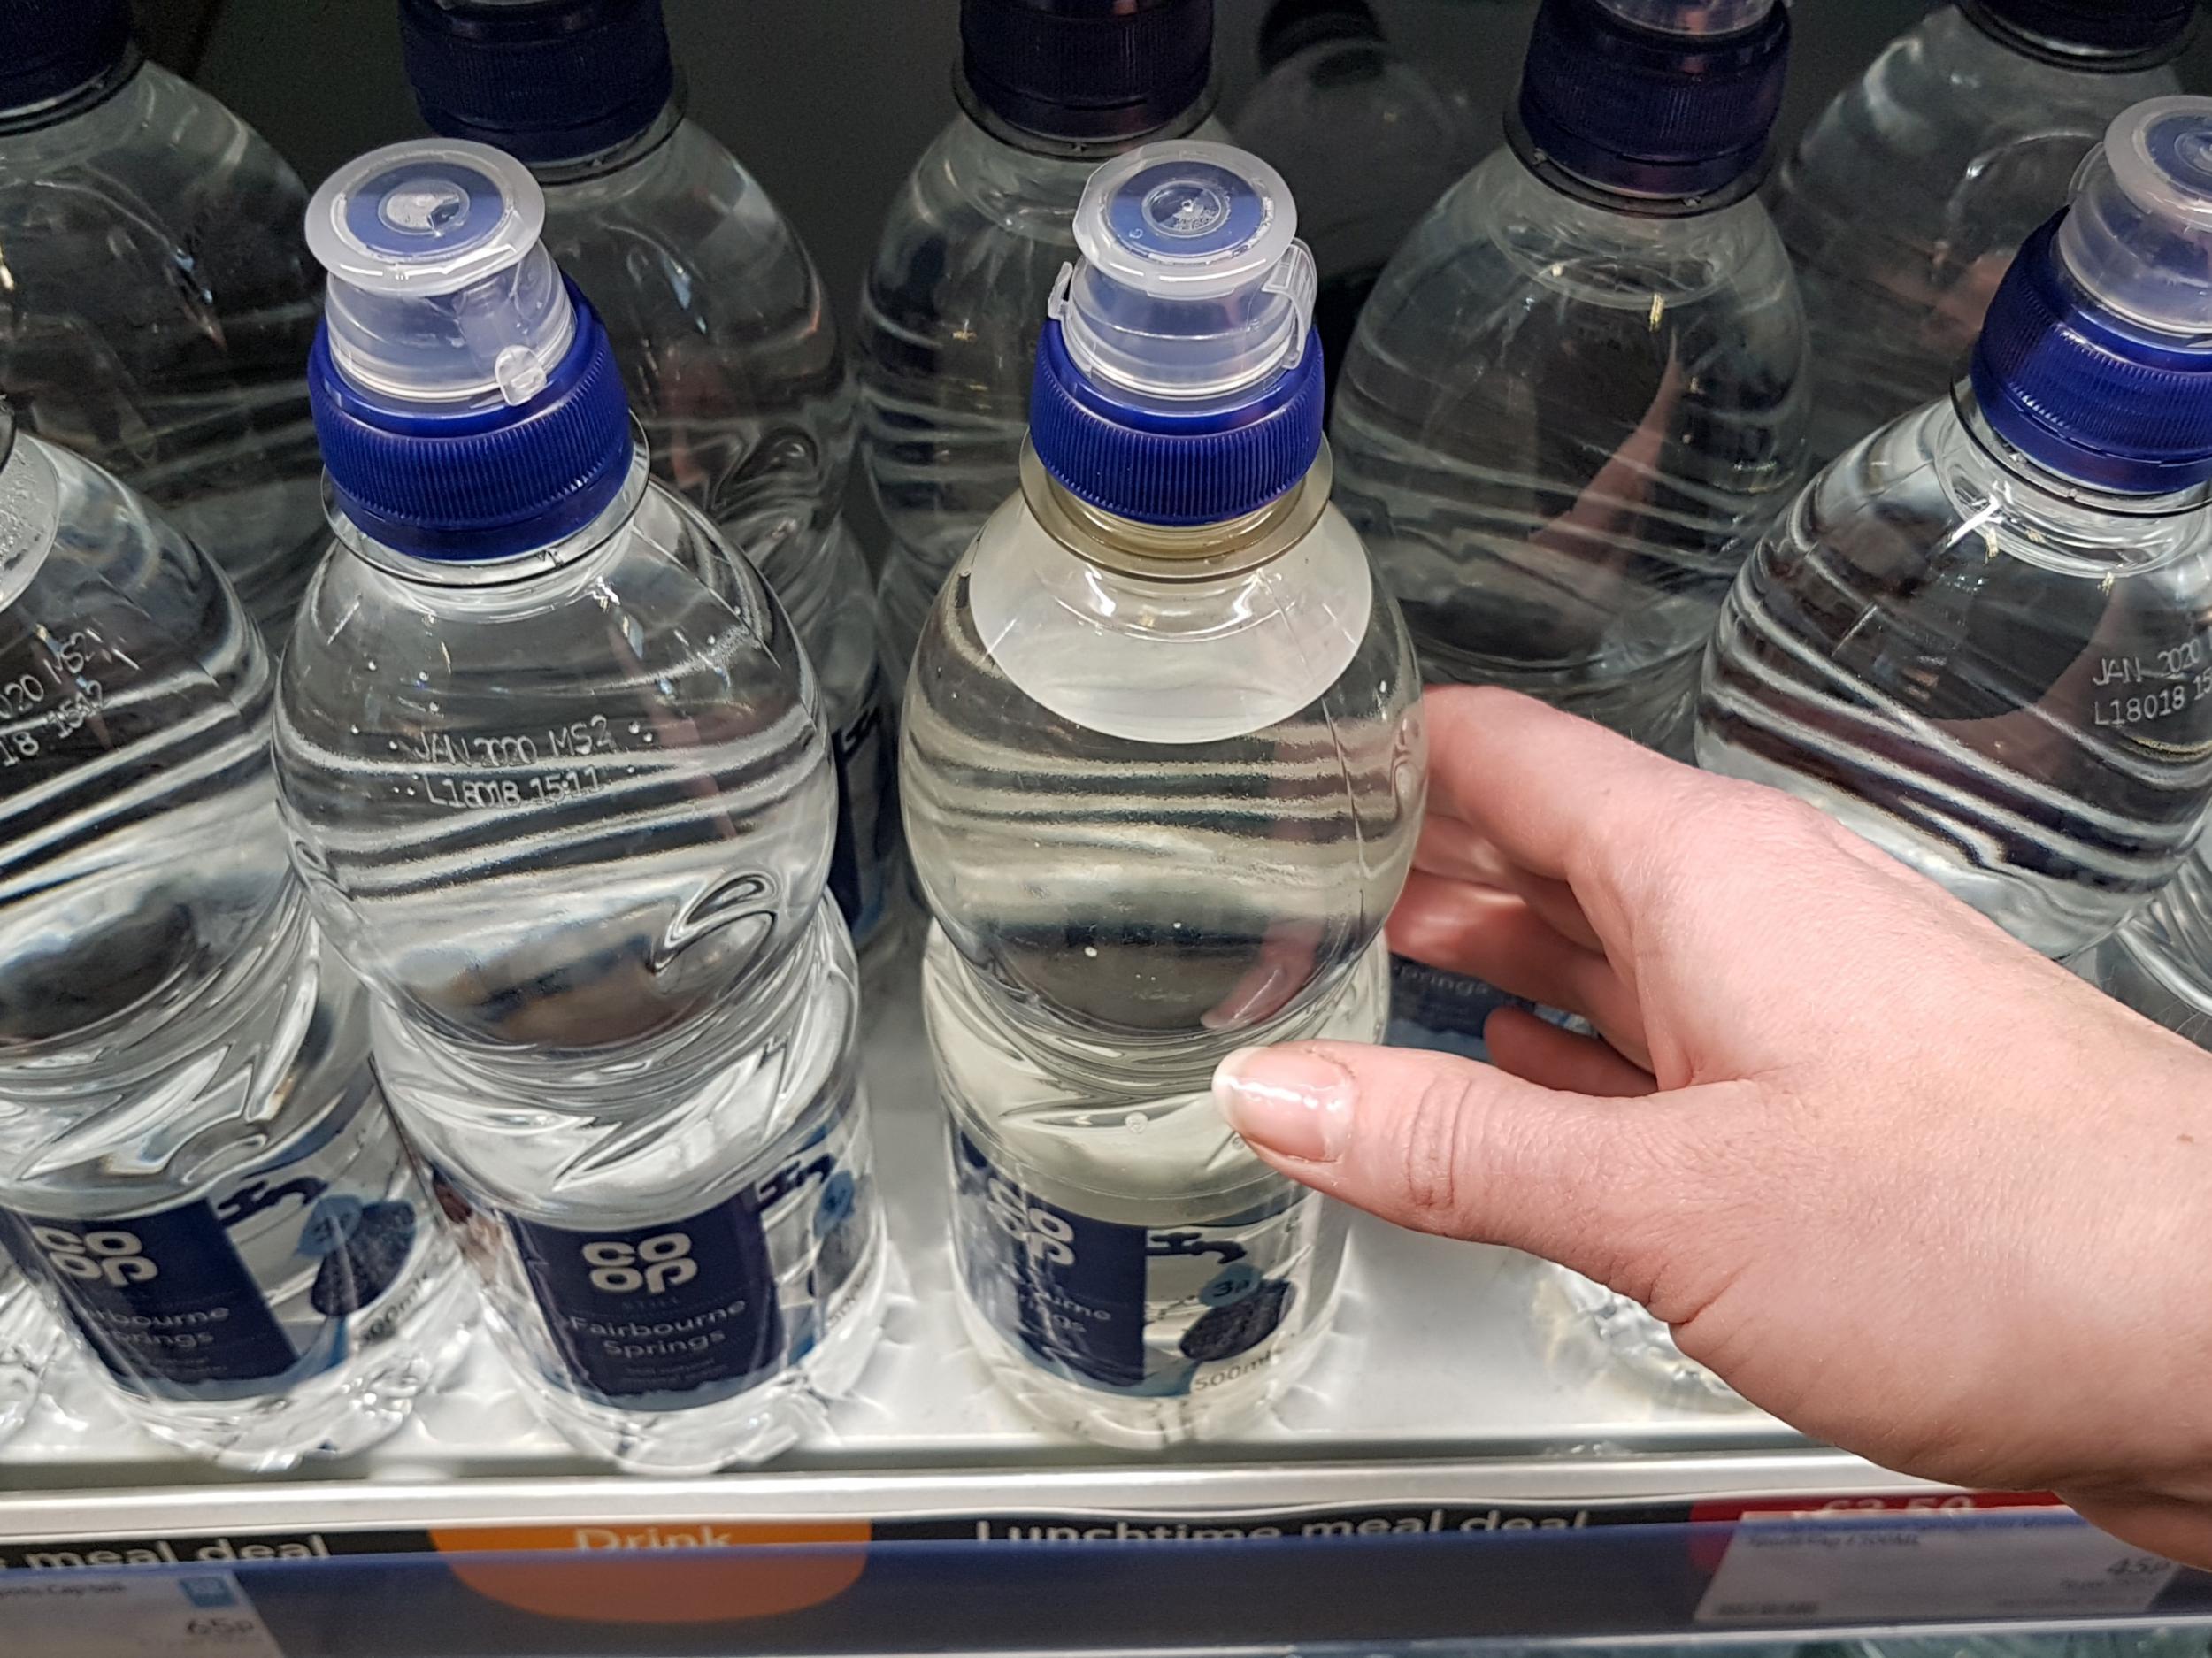 https://static.independent.co.uk/s3fs-public/thumbnails/image/2018/03/31/15/co-op-water-bottle.jpg